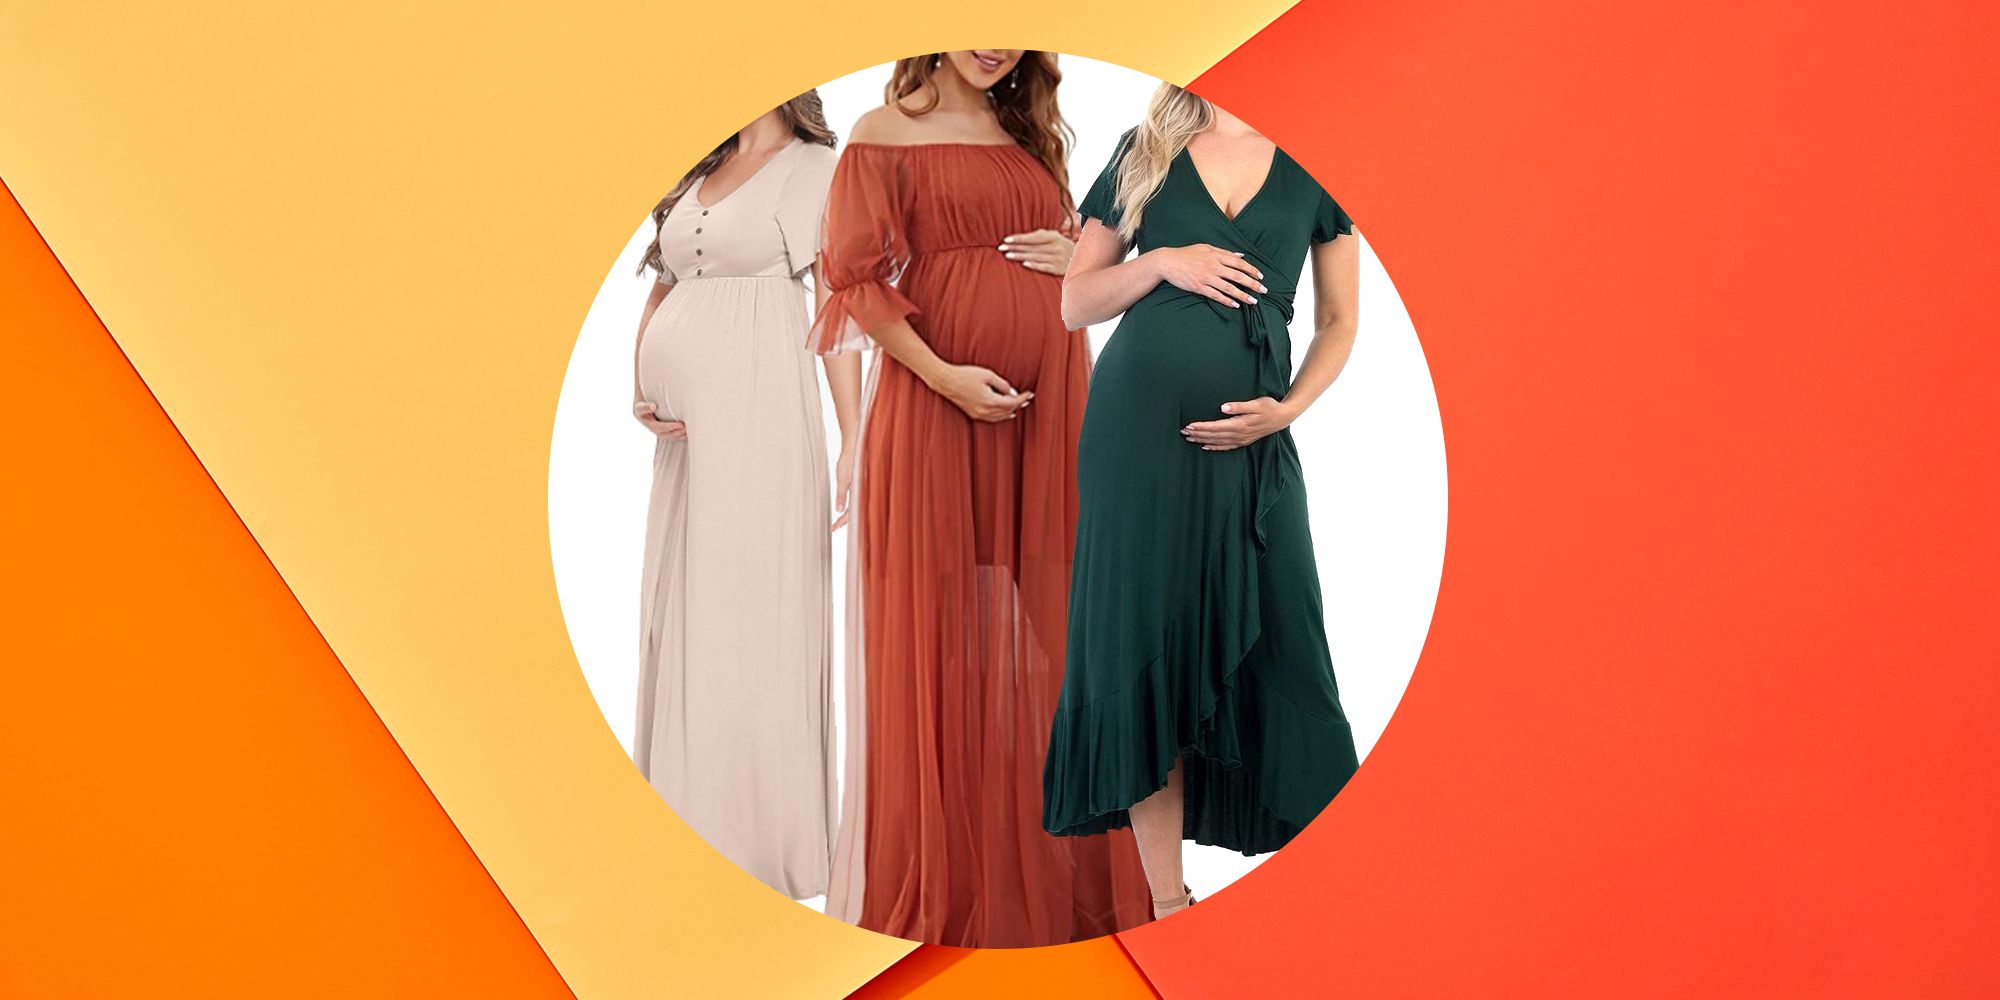 pregnancy dresses